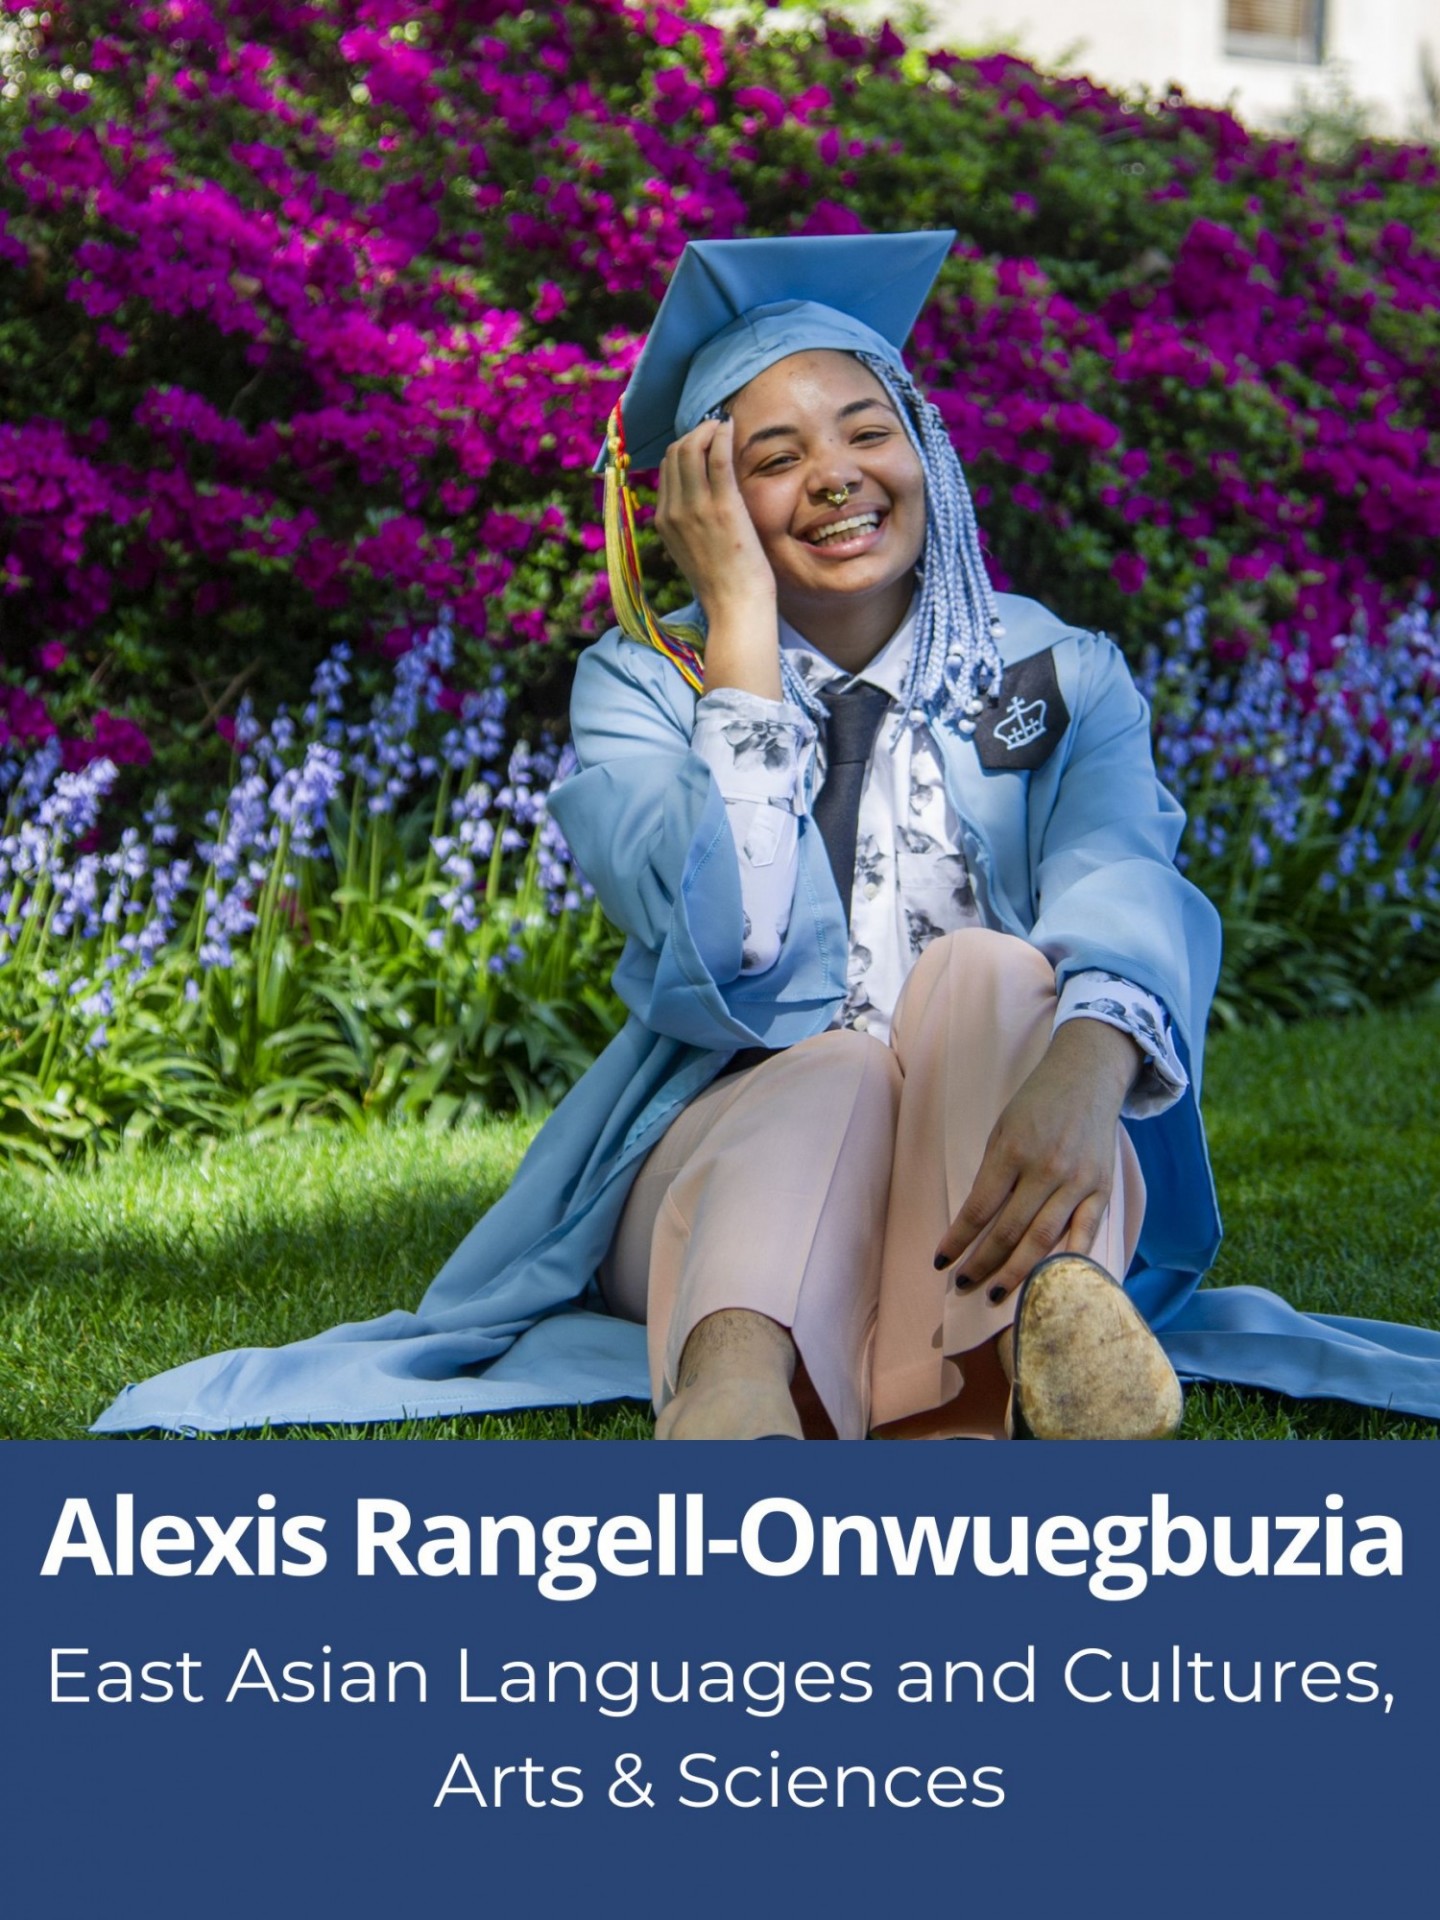 Headshot of Alexis Rangell-Onwuegbuzia with their name underneath